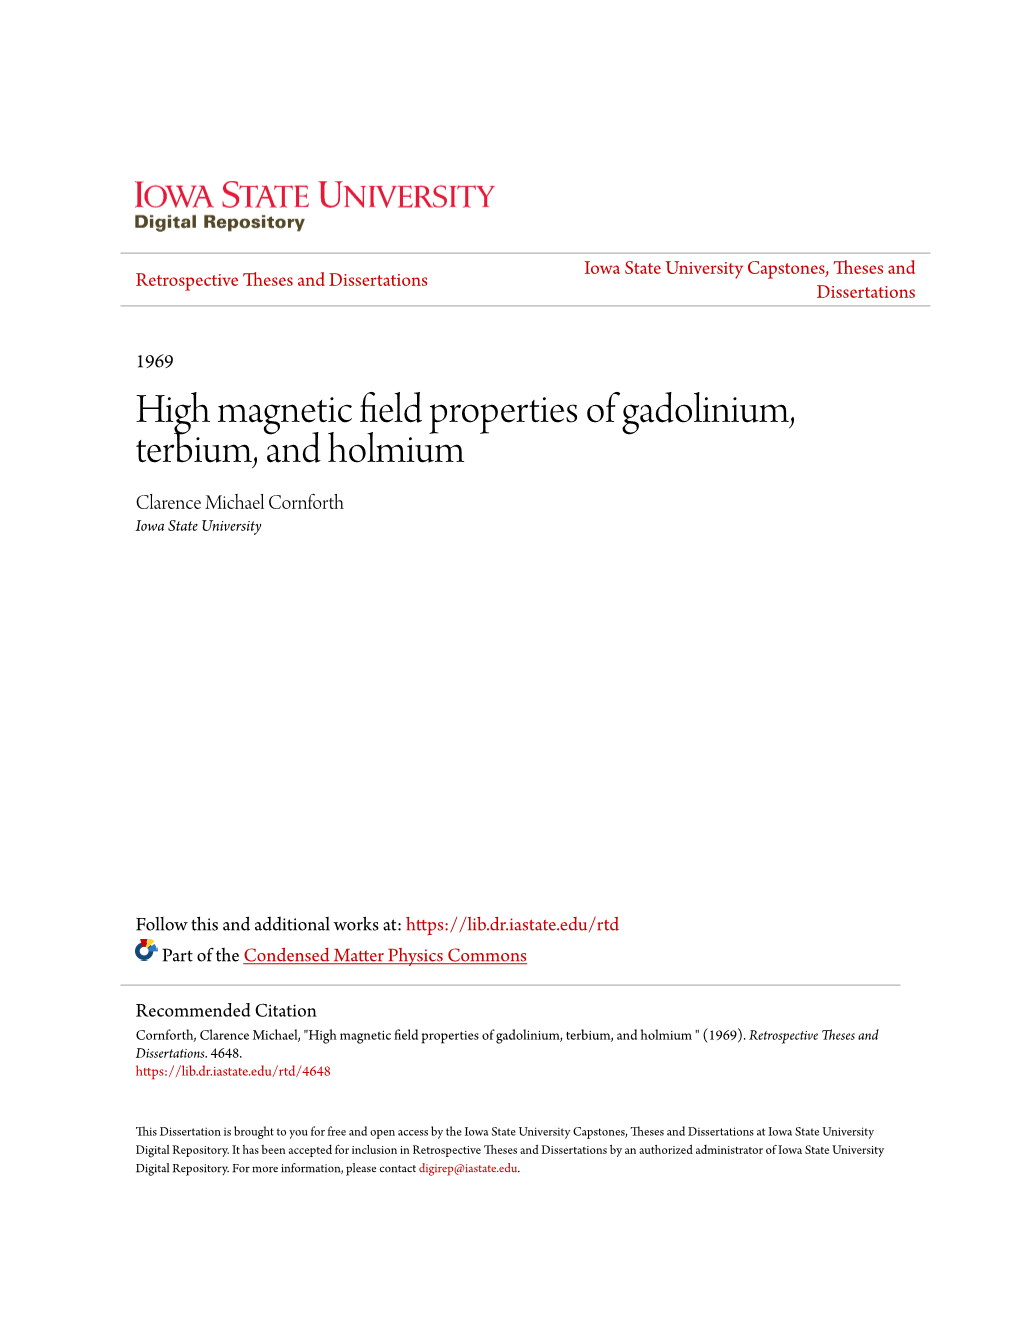 High Magnetic Field Properties of Gadolinium, Terbium, and Holmium Clarence Michael Cornforth Iowa State University